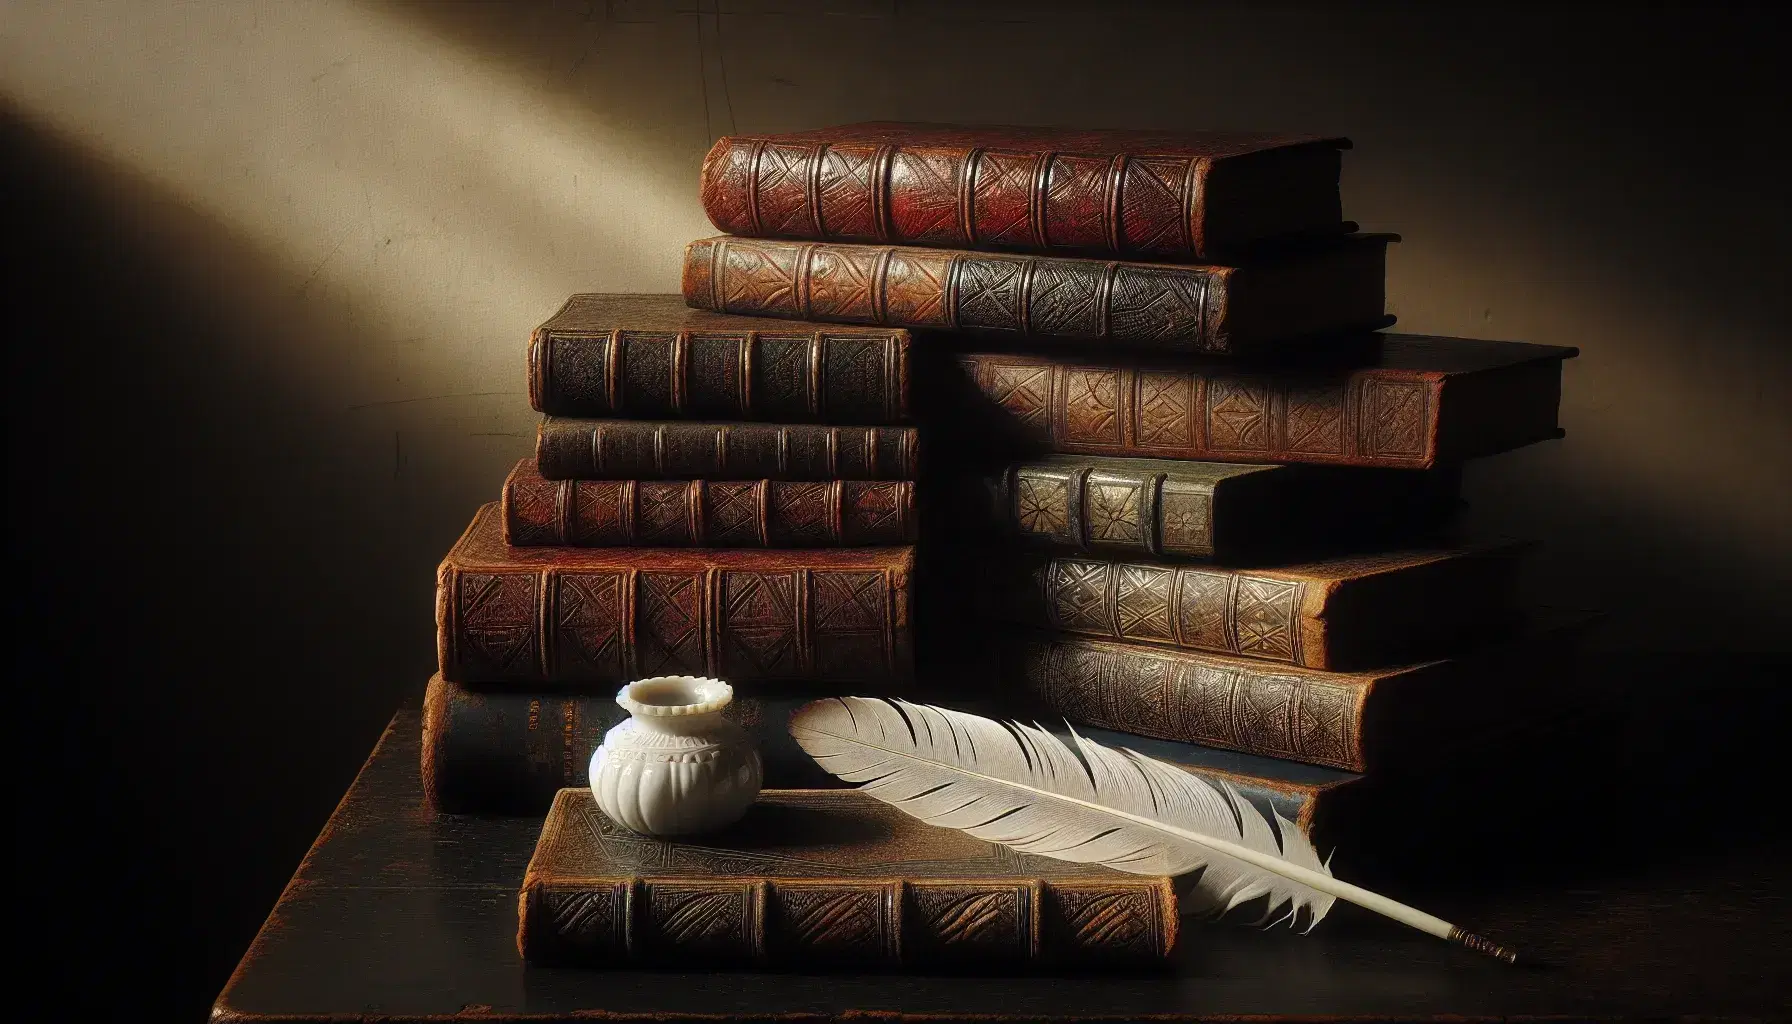 Pila de libros antiguos con tapas de cuero sobre mesa de madera oscura, acompañados de una pluma blanca y tintero de porcelana con bordes dorados.